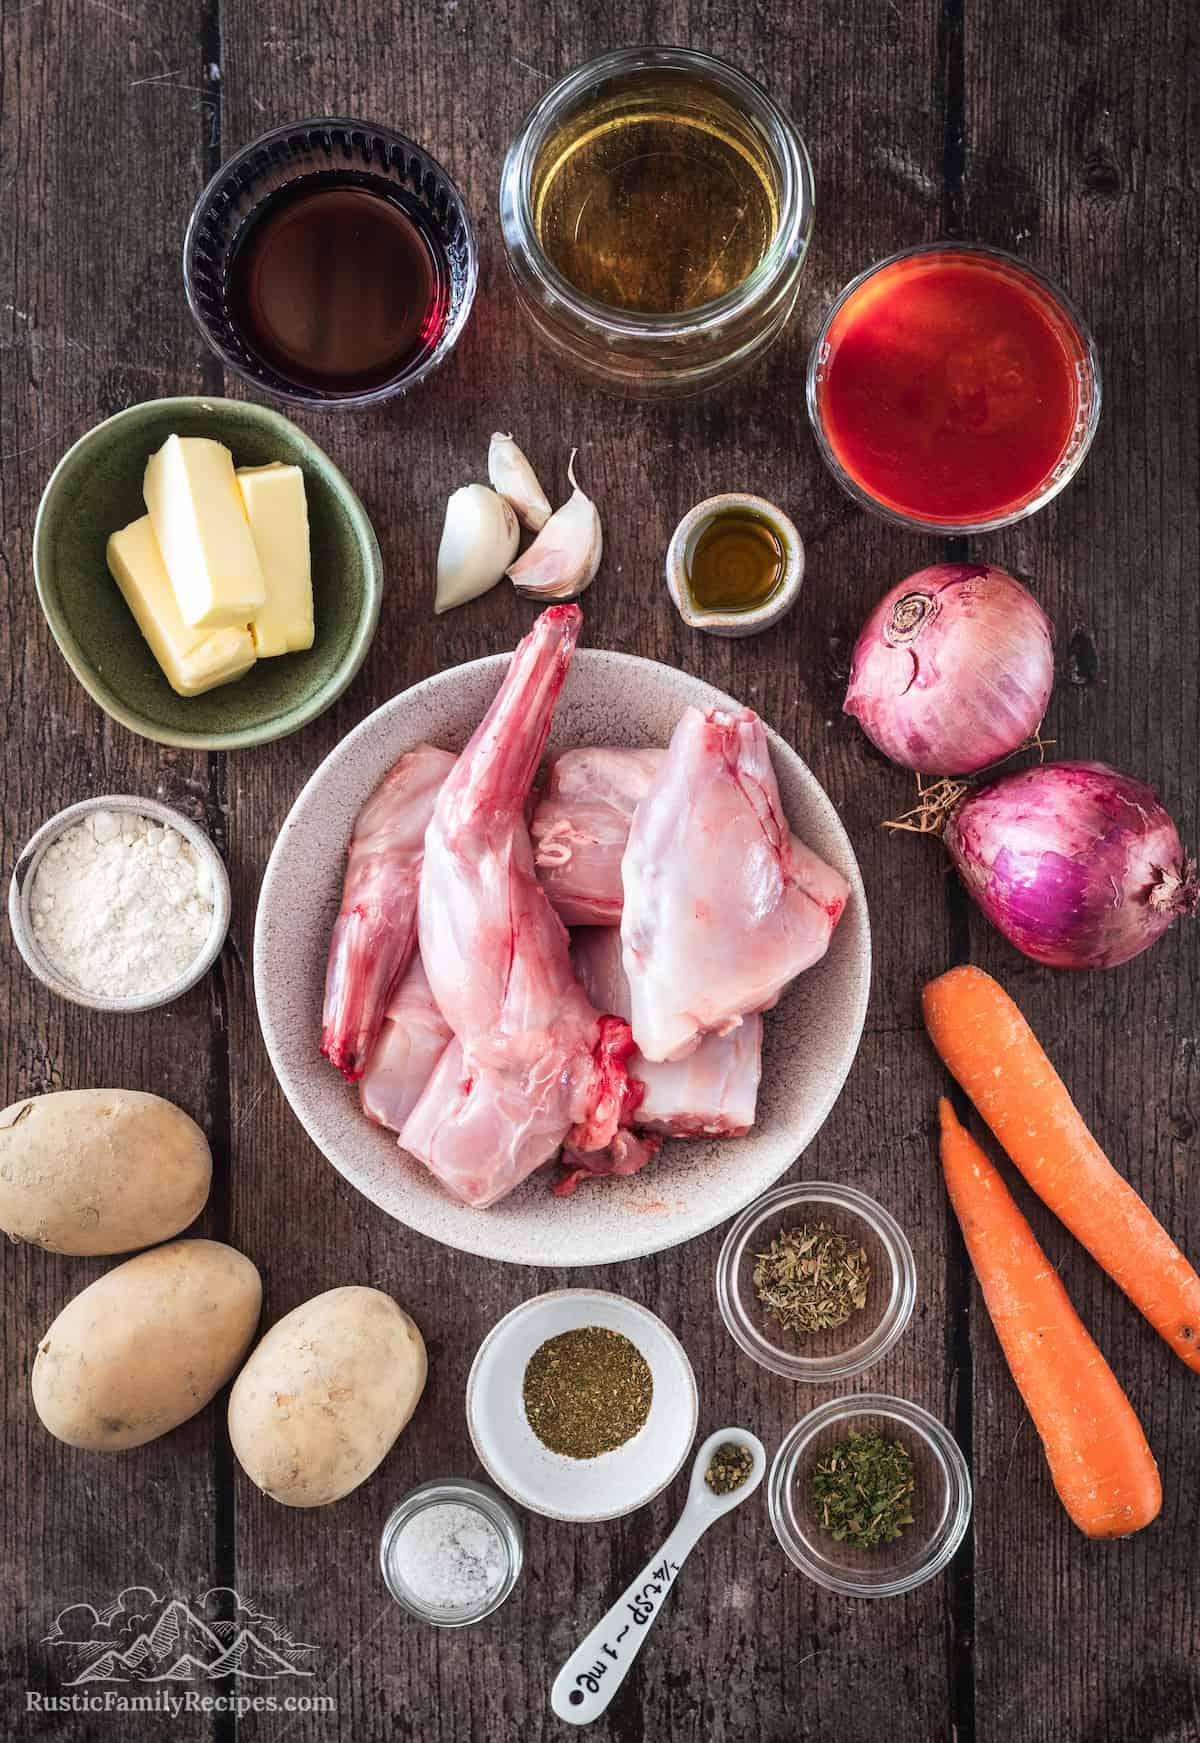 Ingredients for rabbit stew